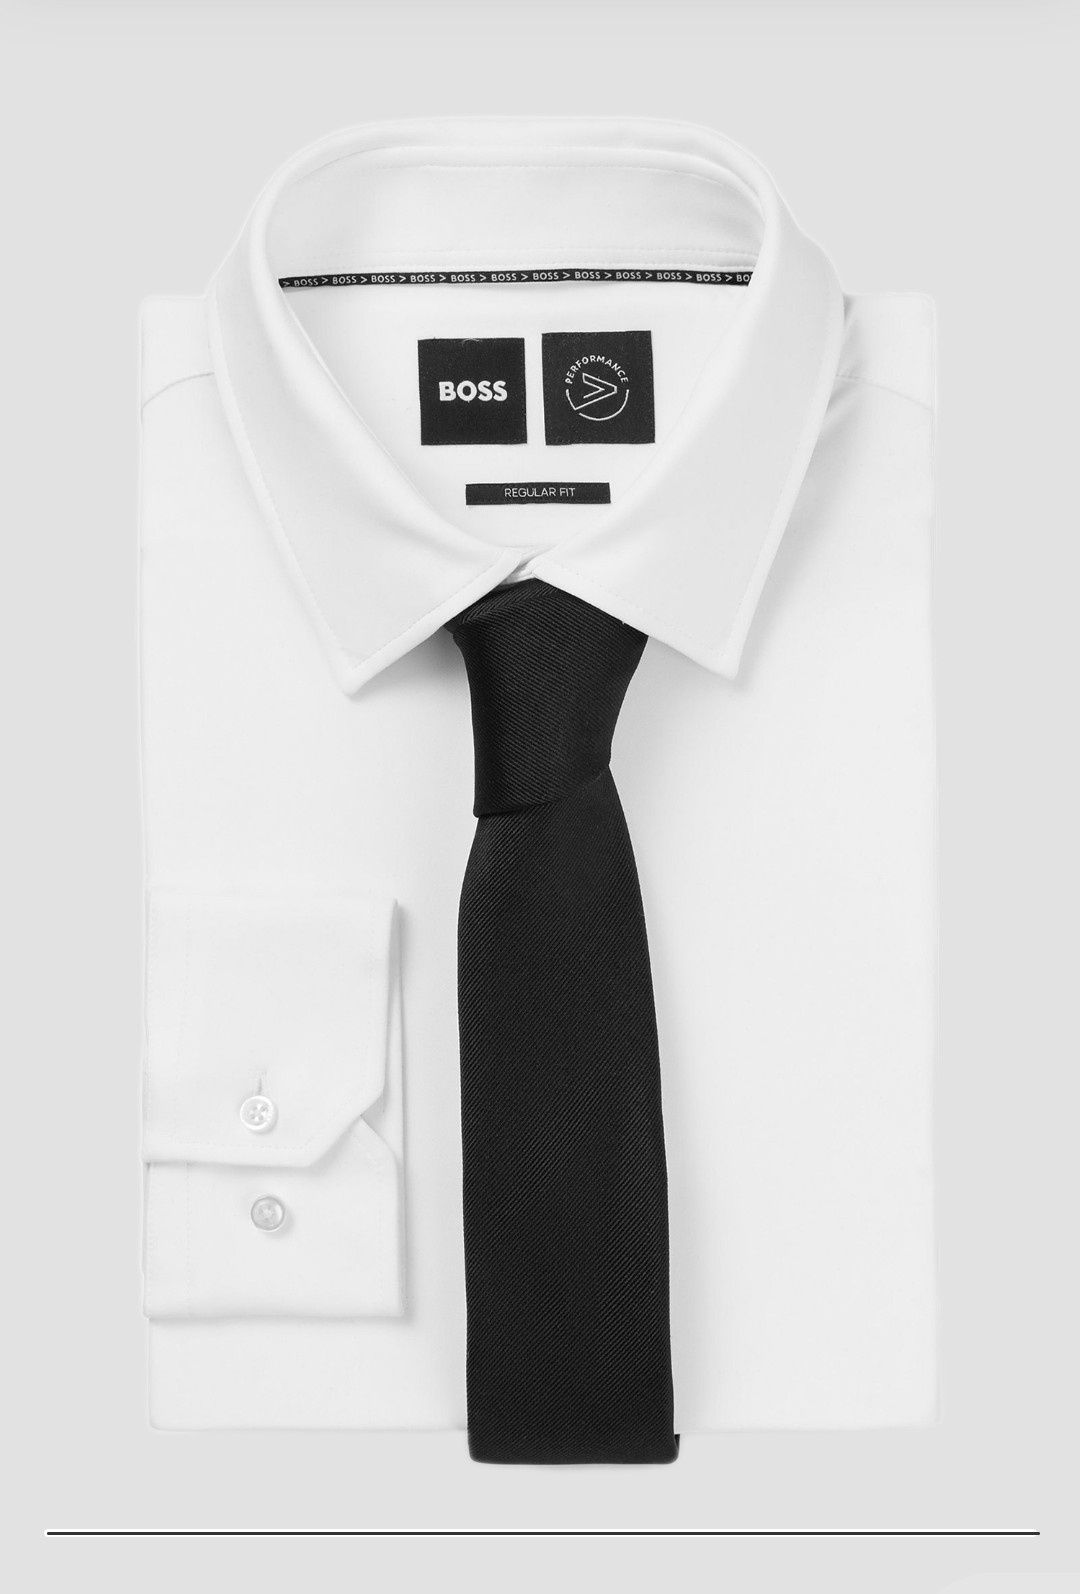 HUGO BOSS оригінальна шовкова класична краватка